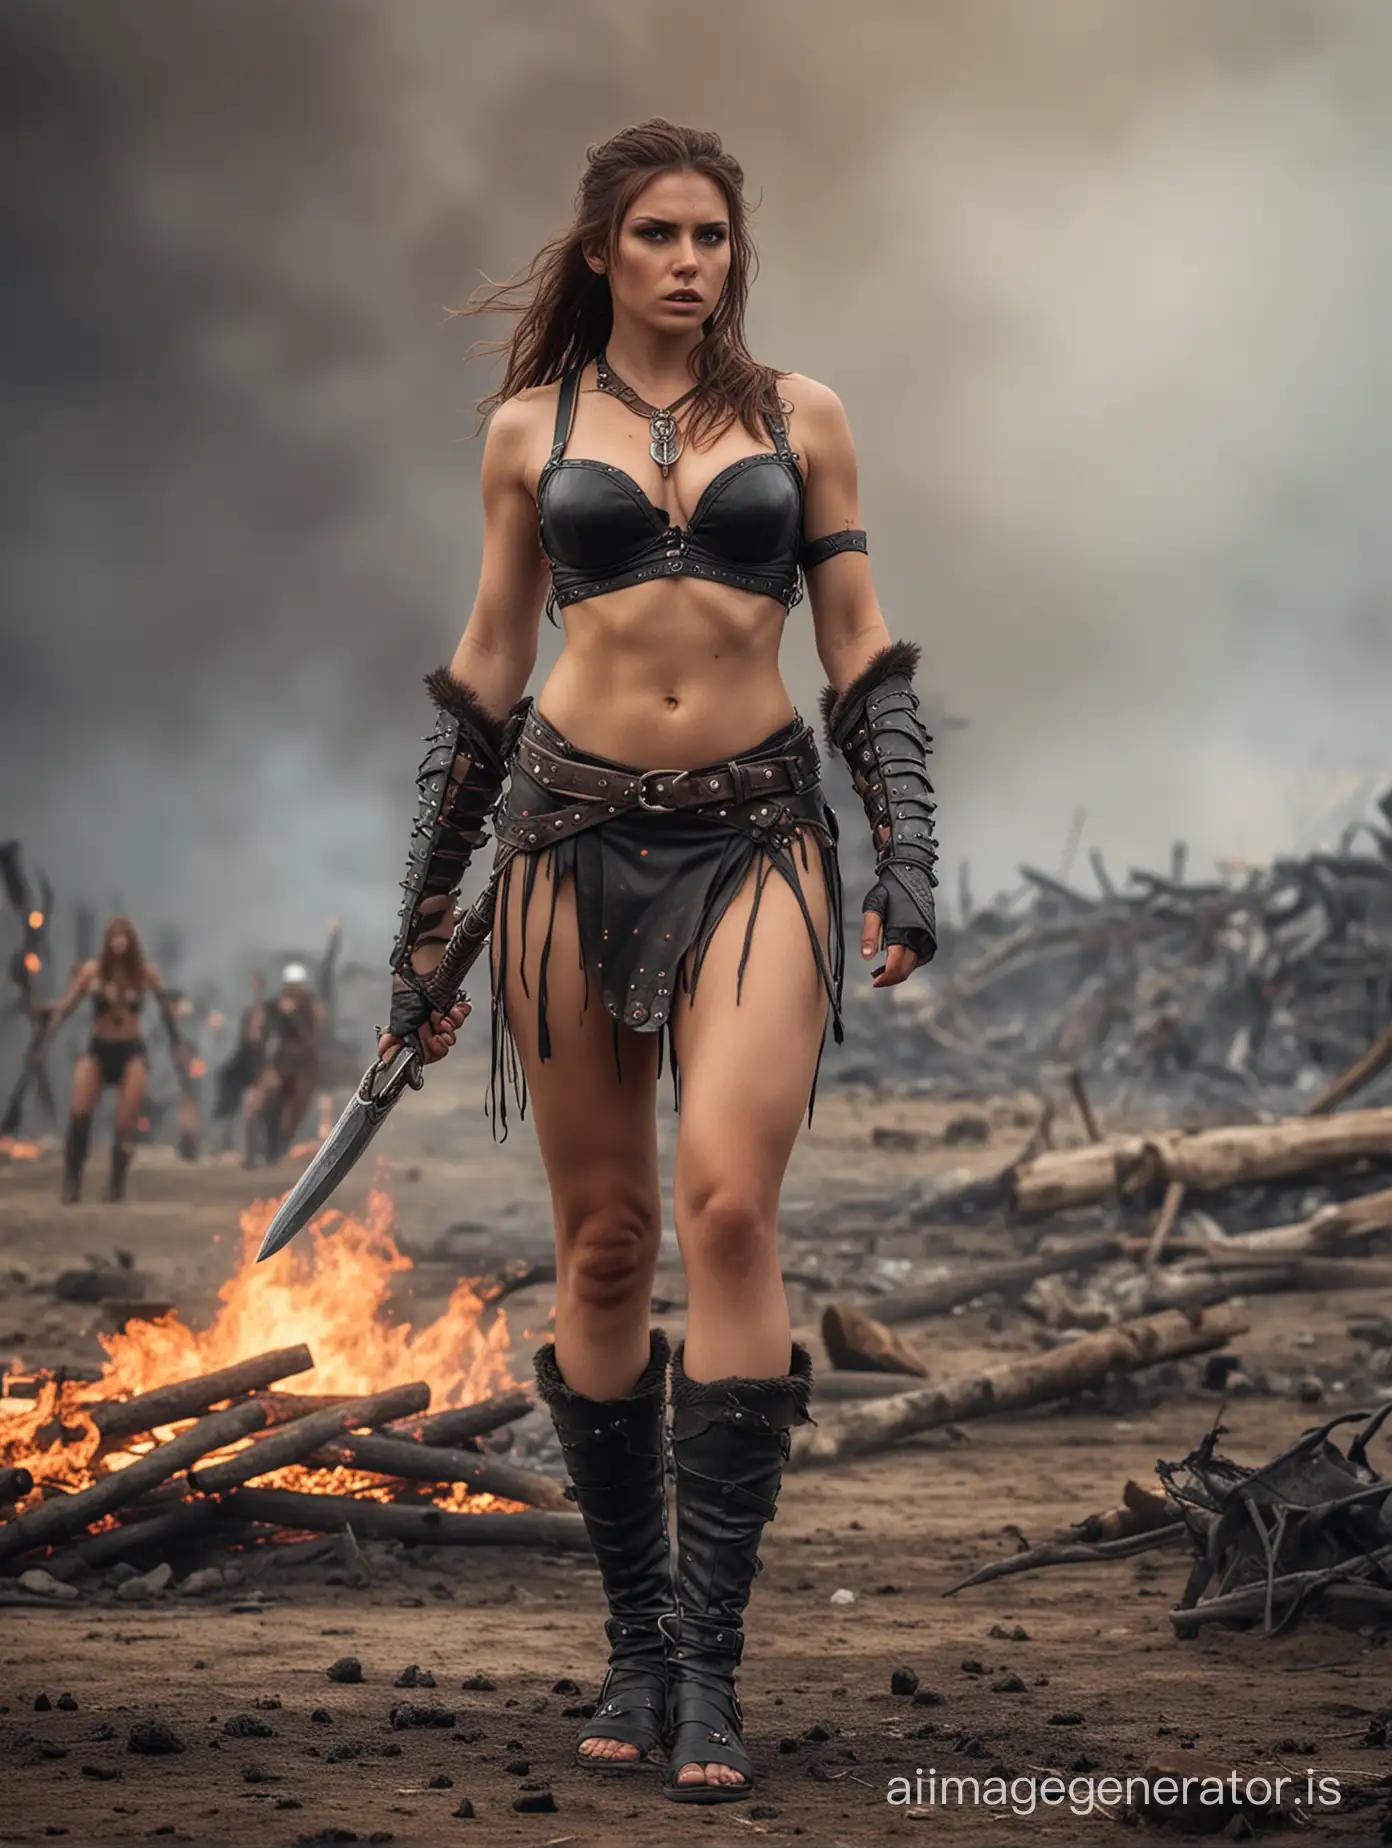 Fierce-Female-Barbarian-Warrior-Amidst-Battle-Chaos